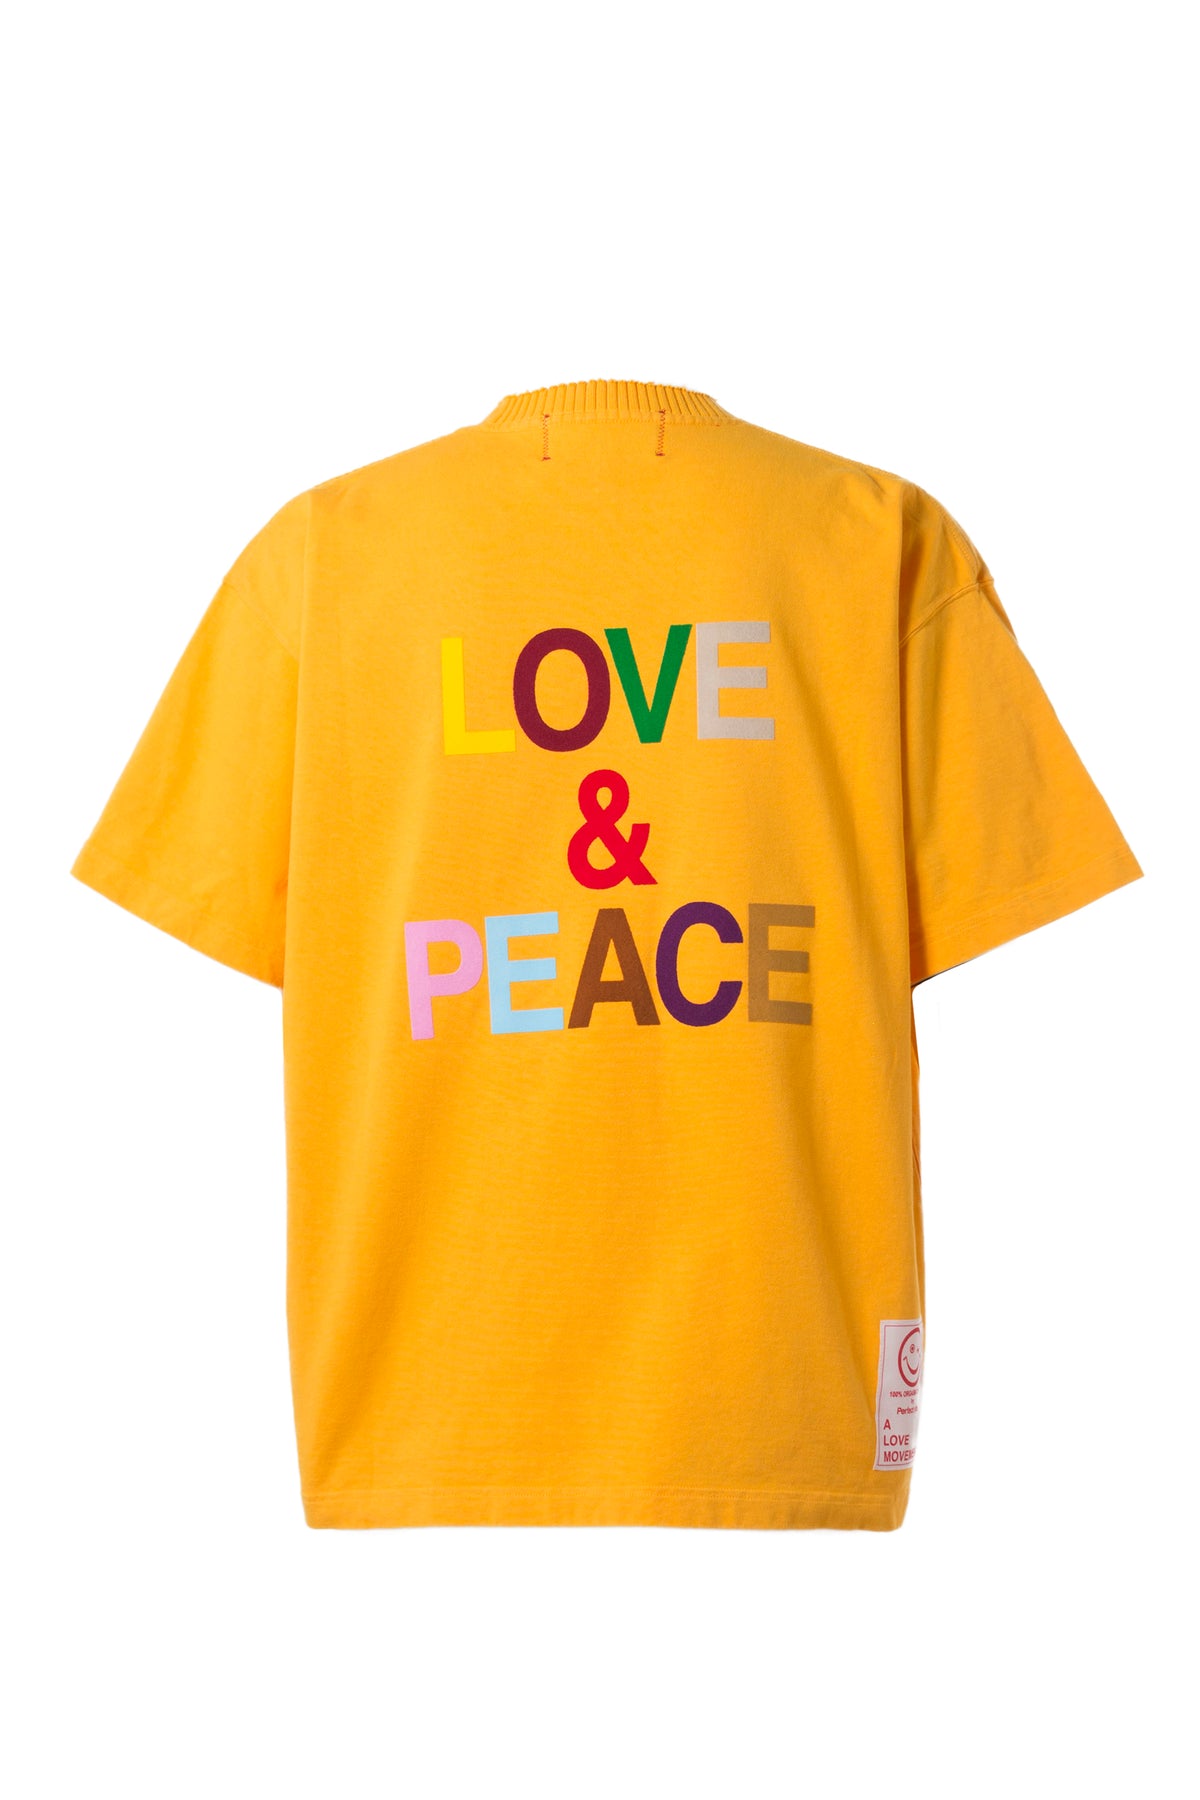 Perfect ribs BASIC SHORT SLEEVE T-SHIRTS "LOVE & PEACE" / YEL